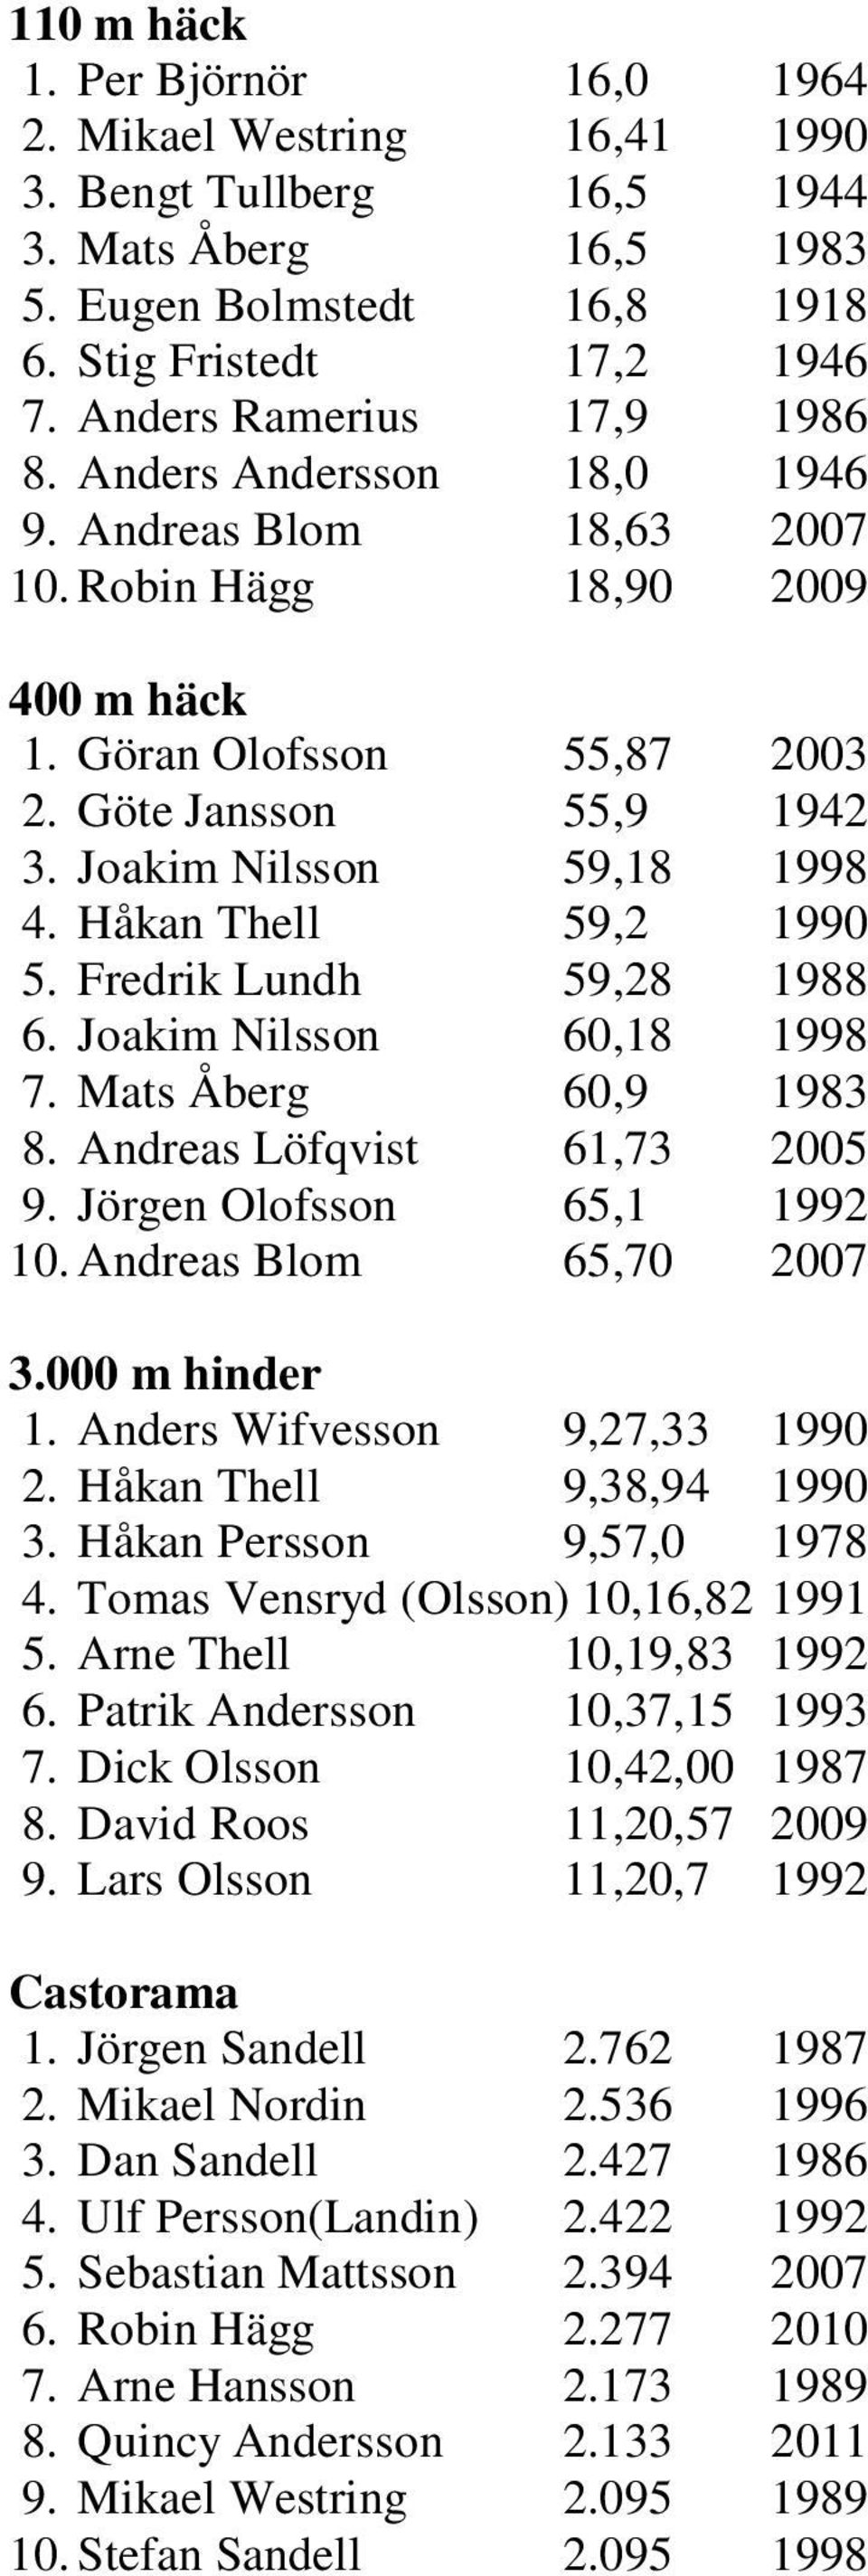 Joakim Nilsson 59,18 1998 4. Håkan Thell 59,2 1990 5. Fredrik Lundh 59,28 1988 6. Joakim Nilsson 60,18 1998 7. Mats Åberg 60,9 1983 8. Andreas Löfqvist 61,73 2005 9. Jörgen Olofsson 65,1 1992 10.